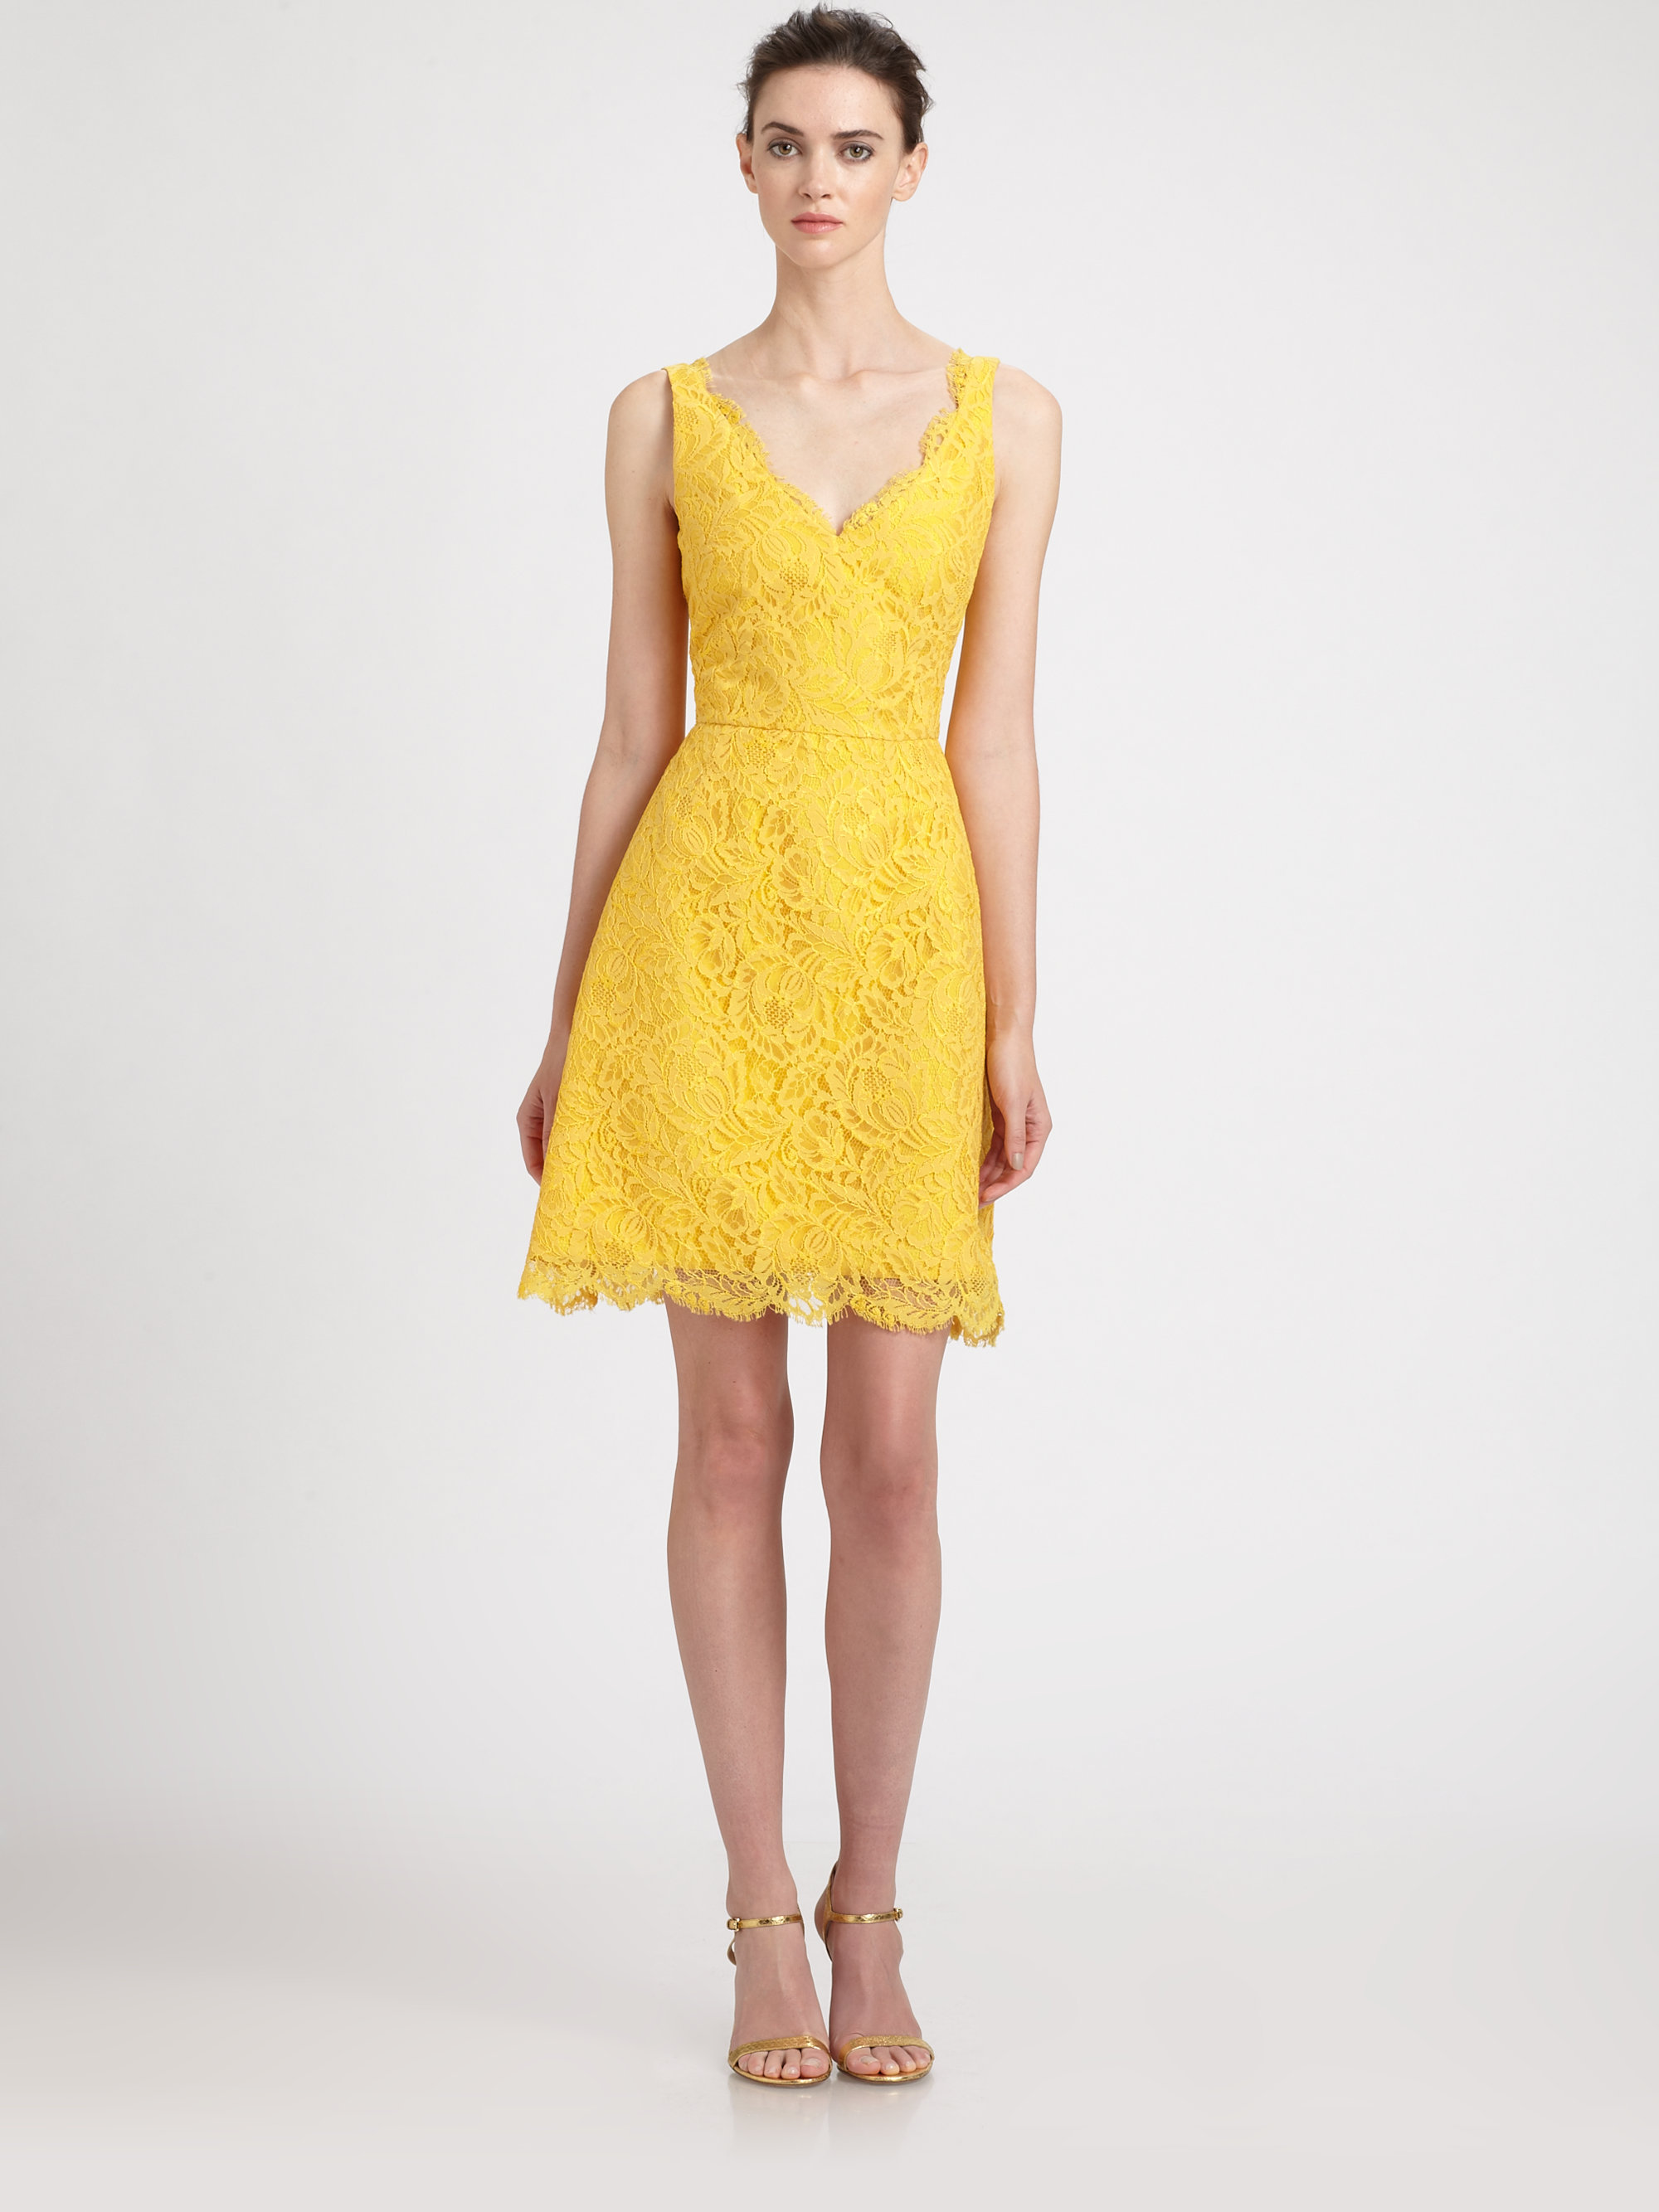 Sunflower yellow dress